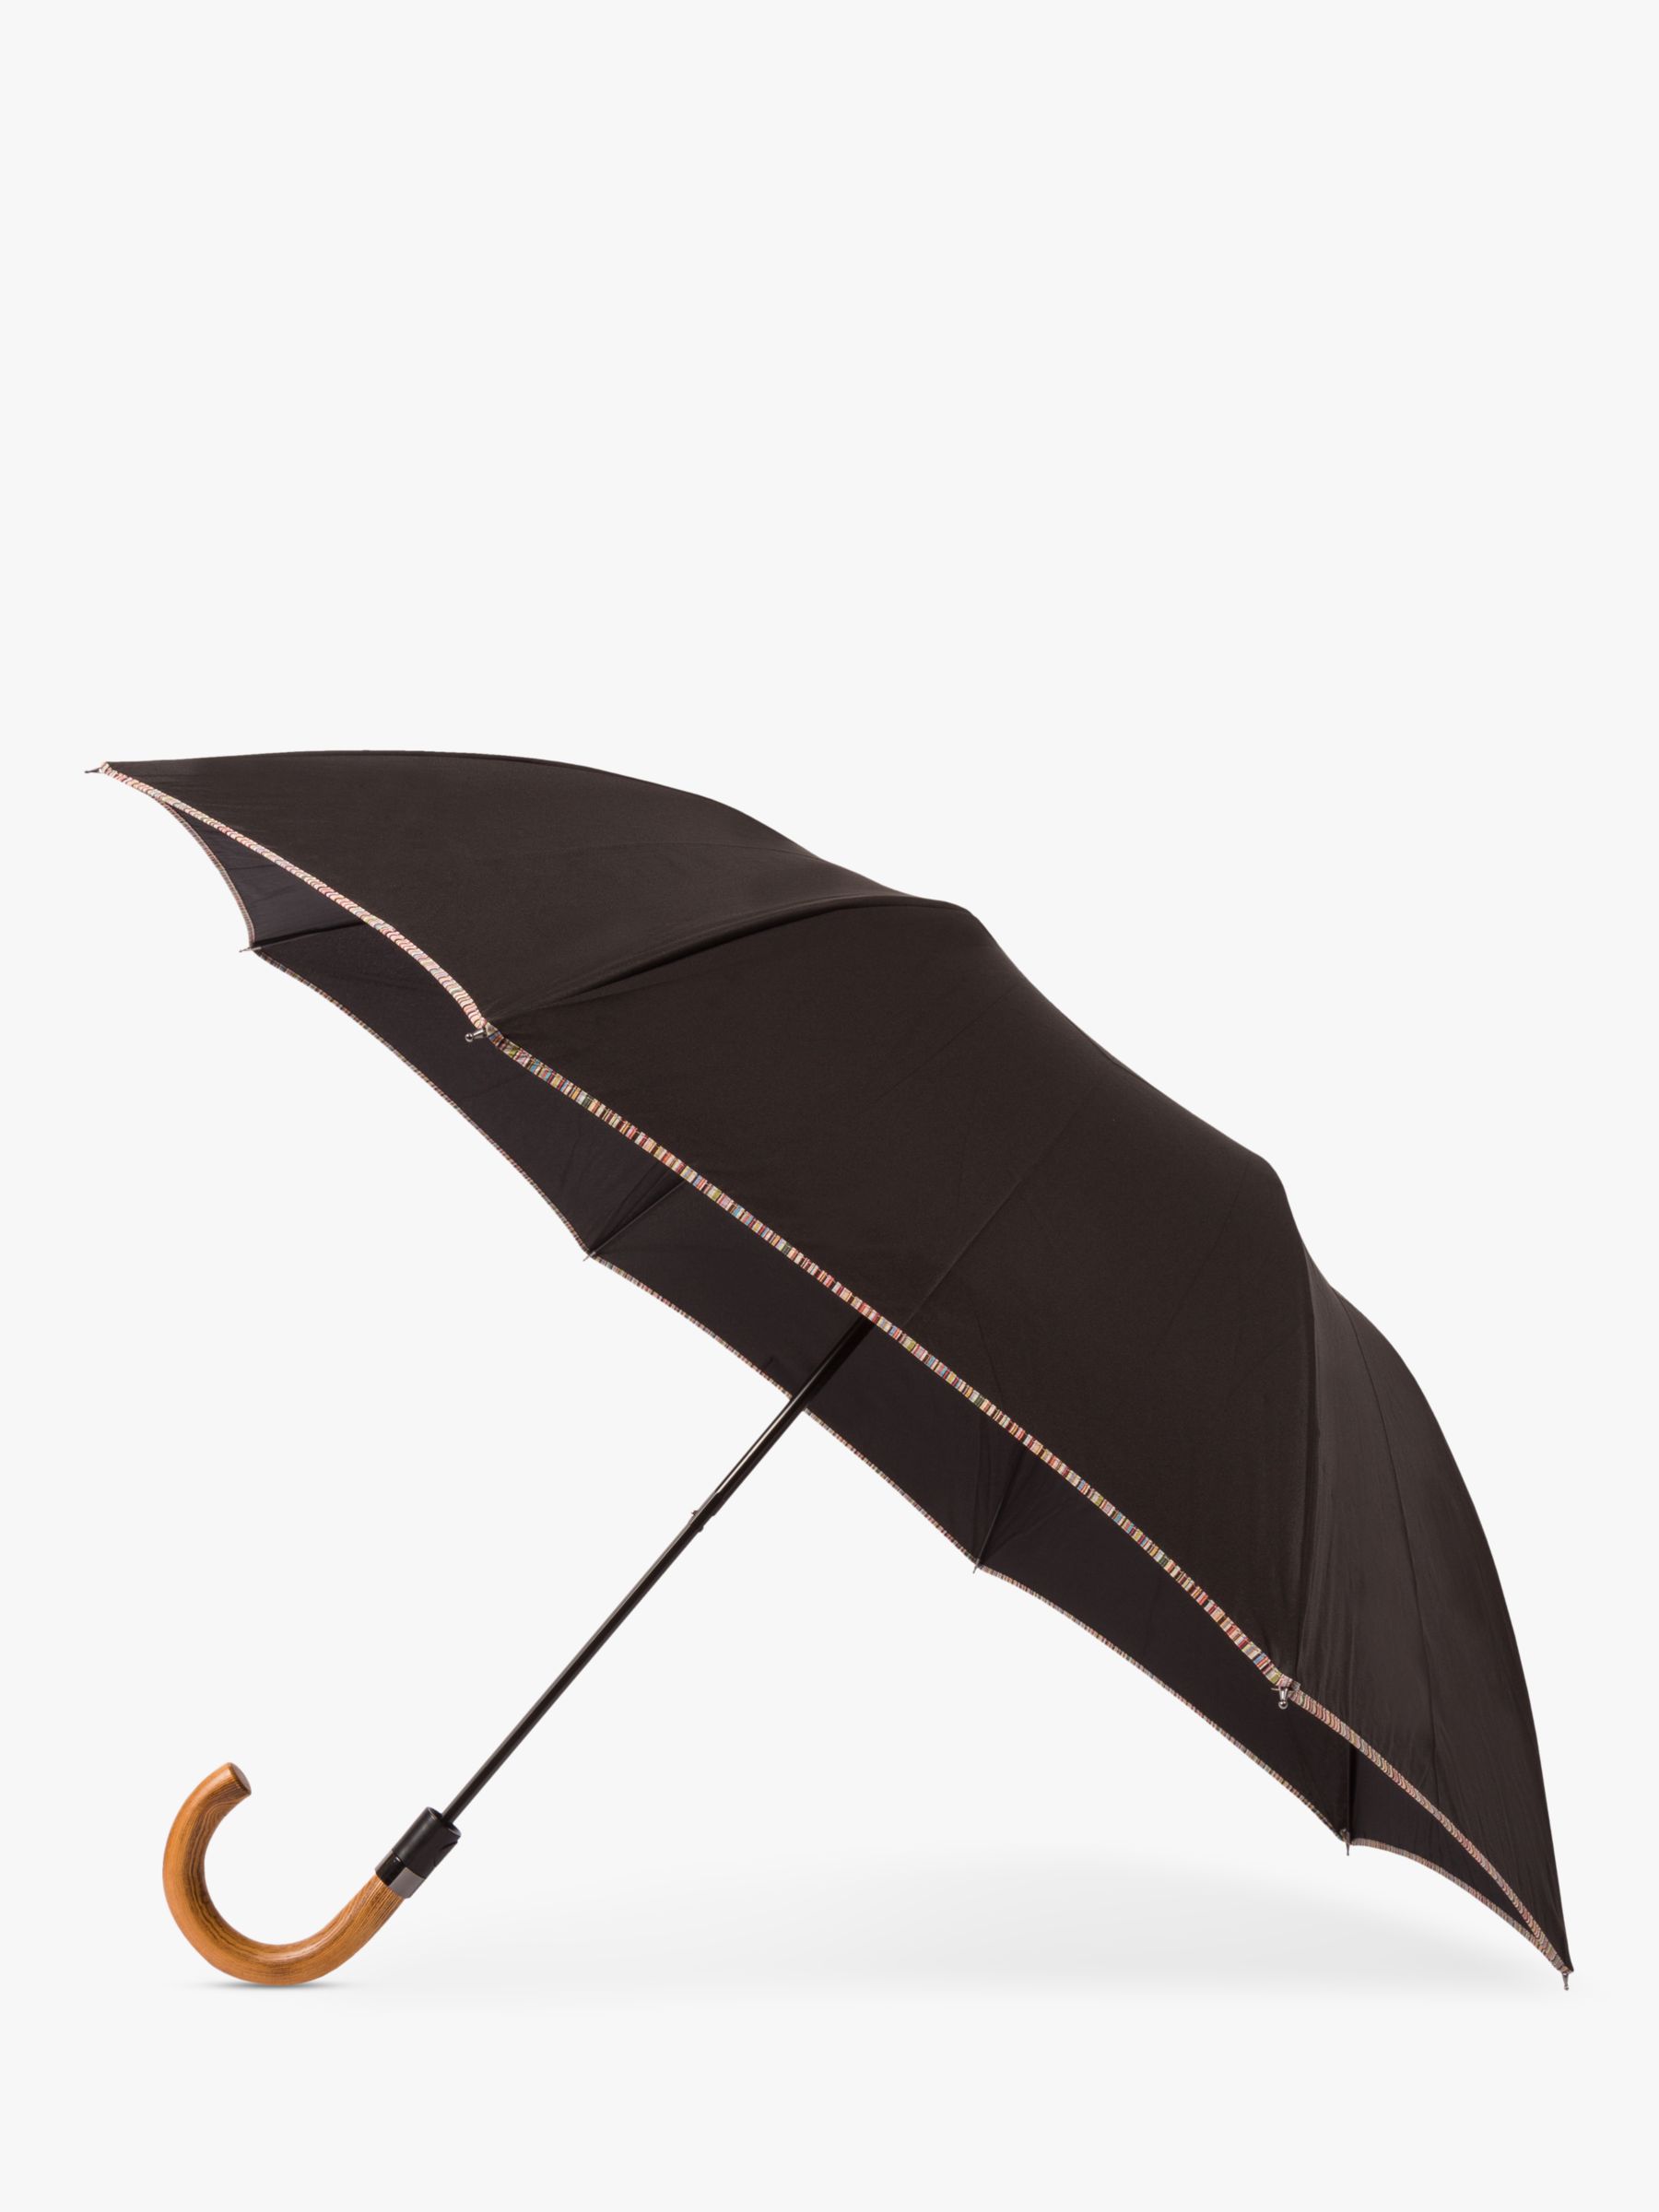 Mens Long Walking Length Umbrella Wood Handle Black by Incognito 